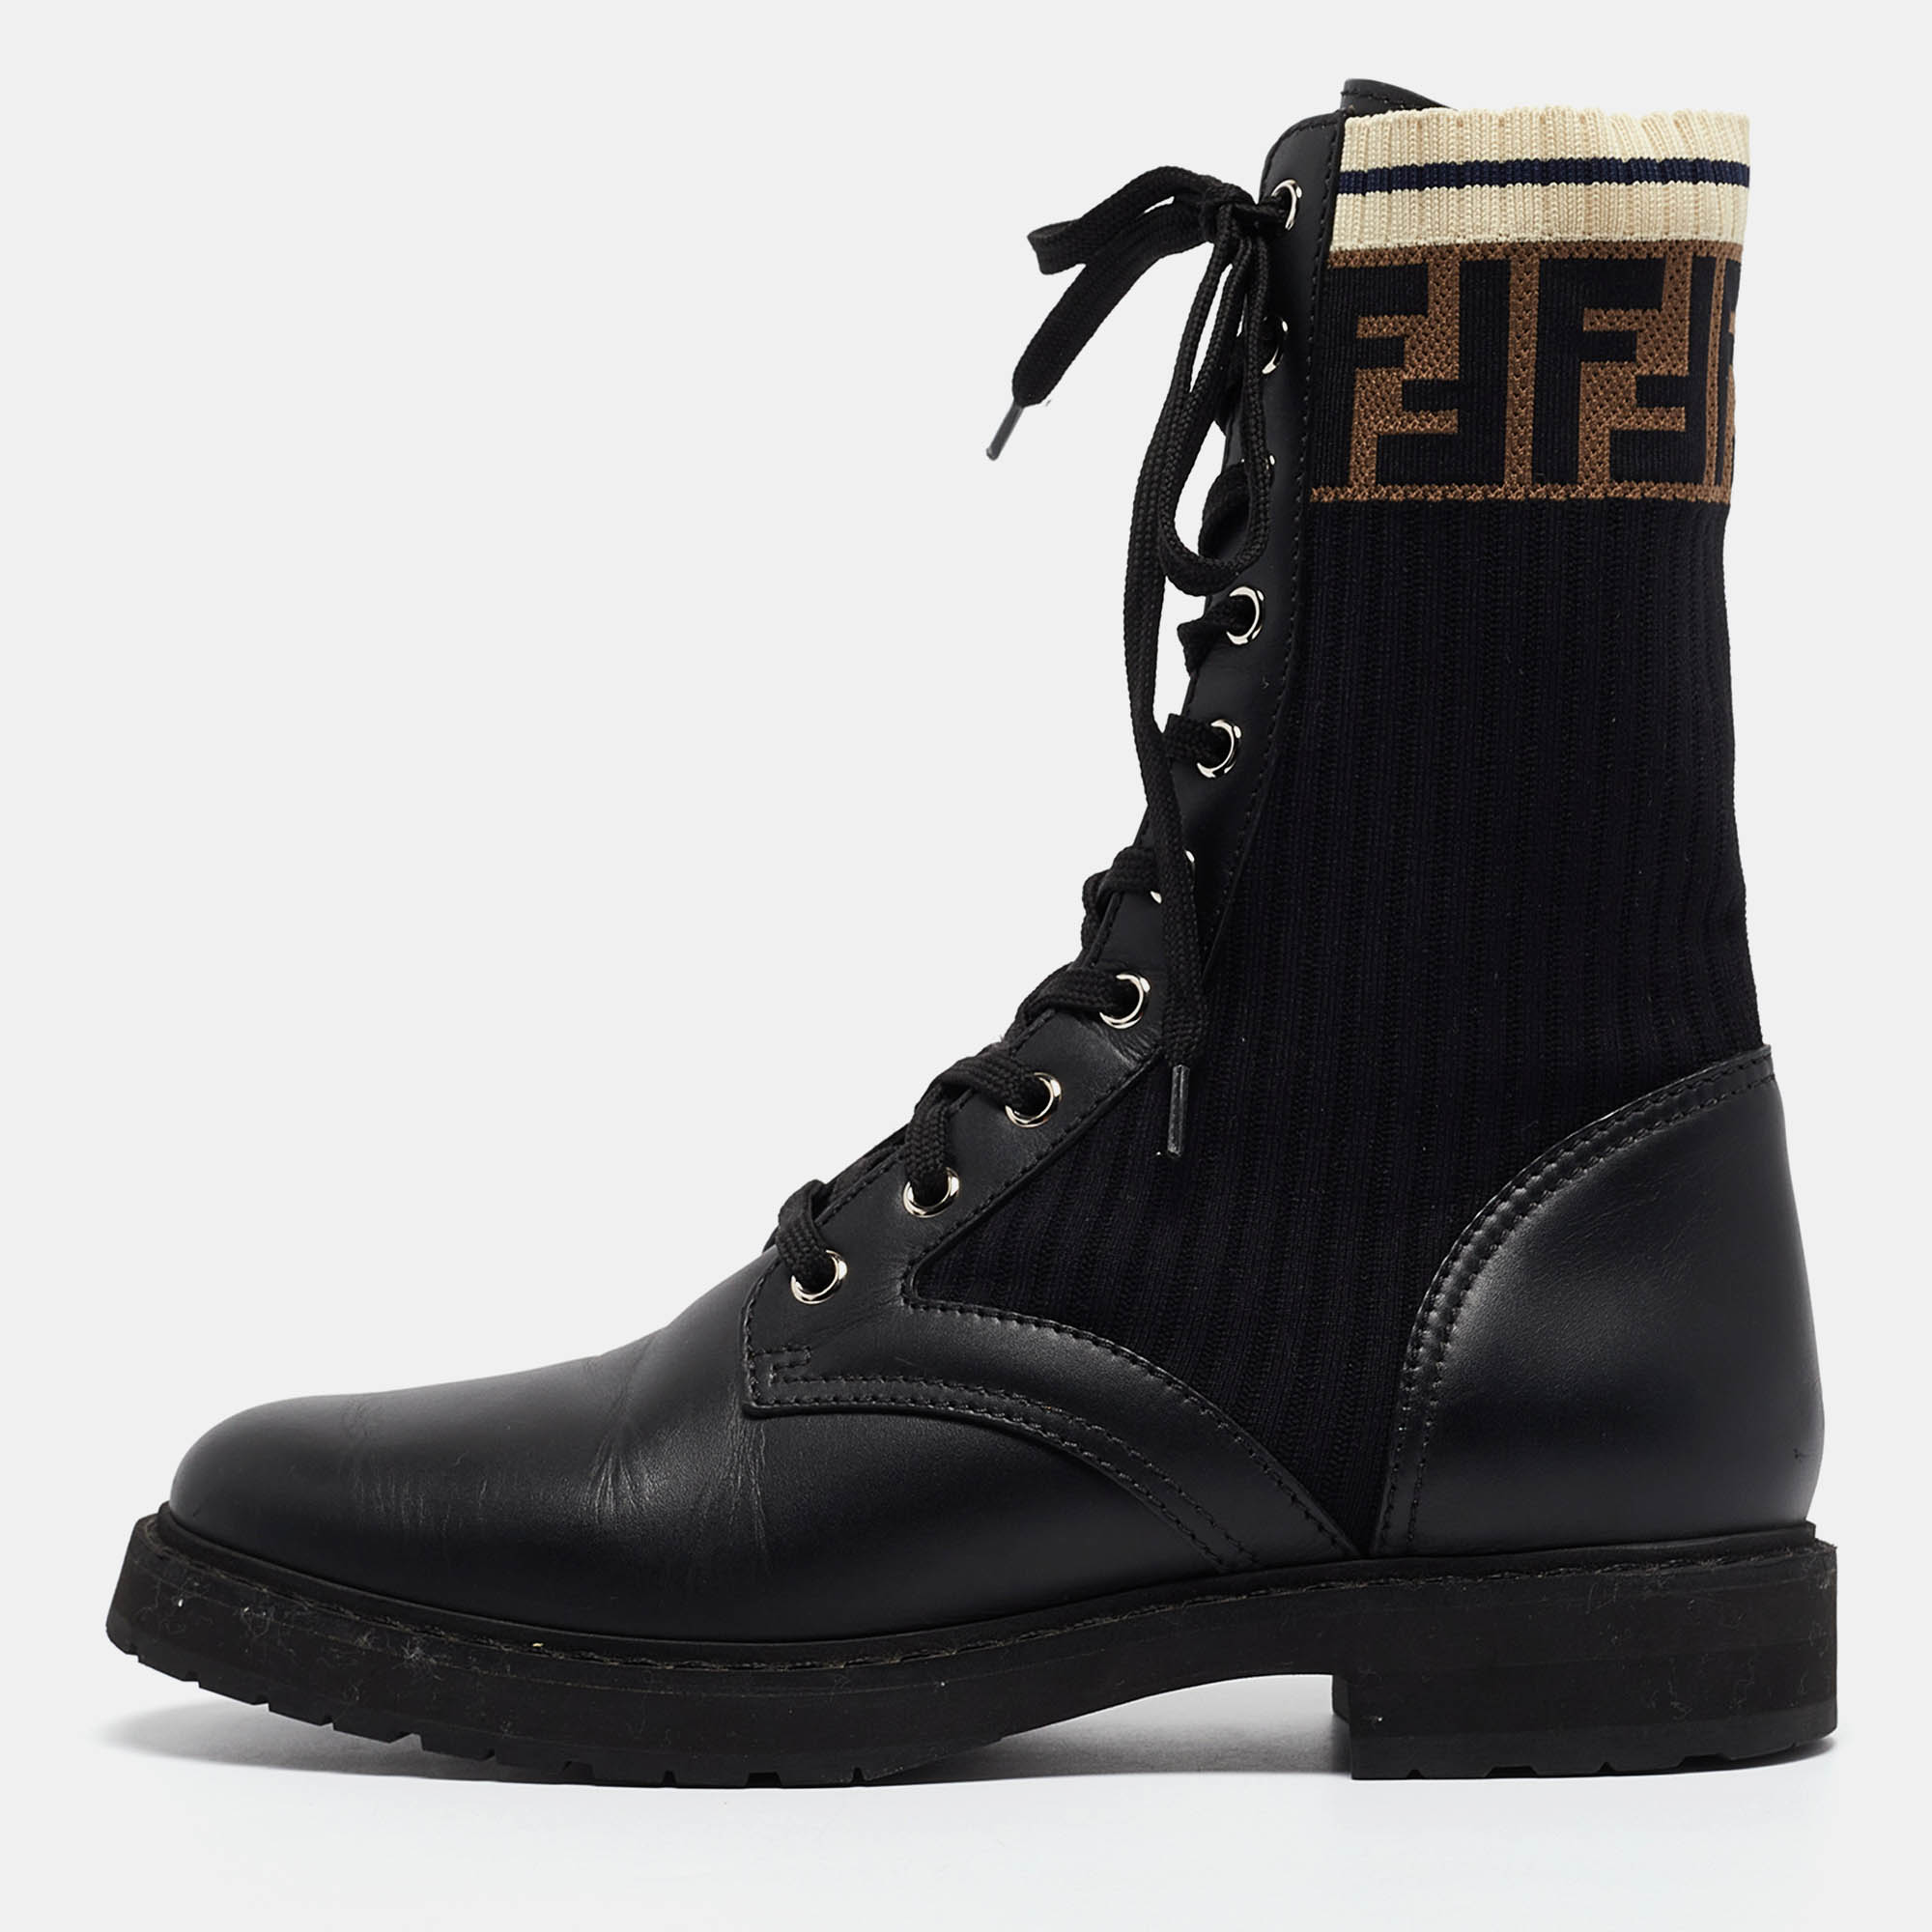 Fendi black leather and zucca stretch fabric rockoko combat boots size 39